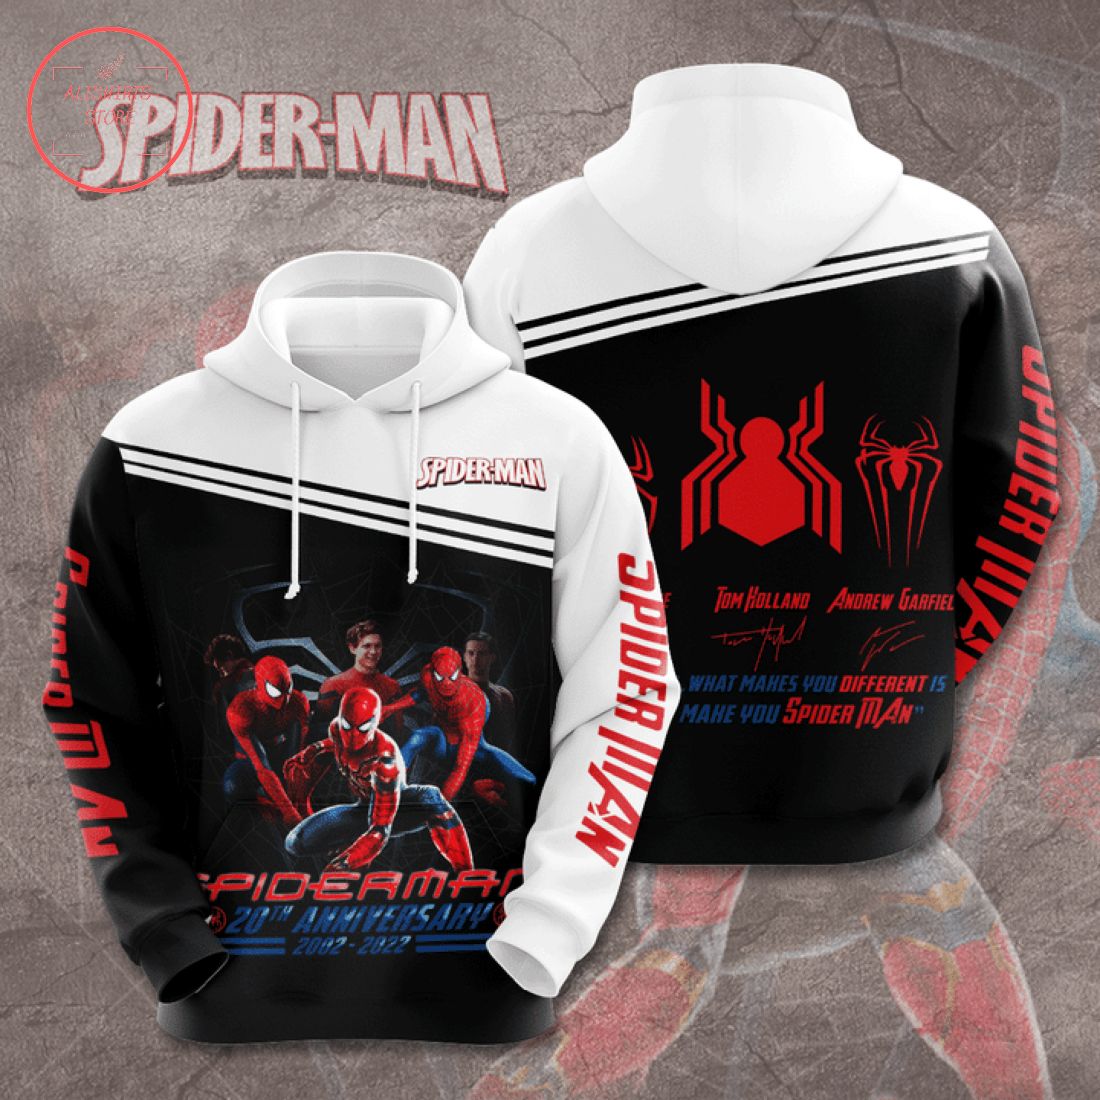 Spider Man 20th Anniversary 2002 2022 Full Printed Shirts